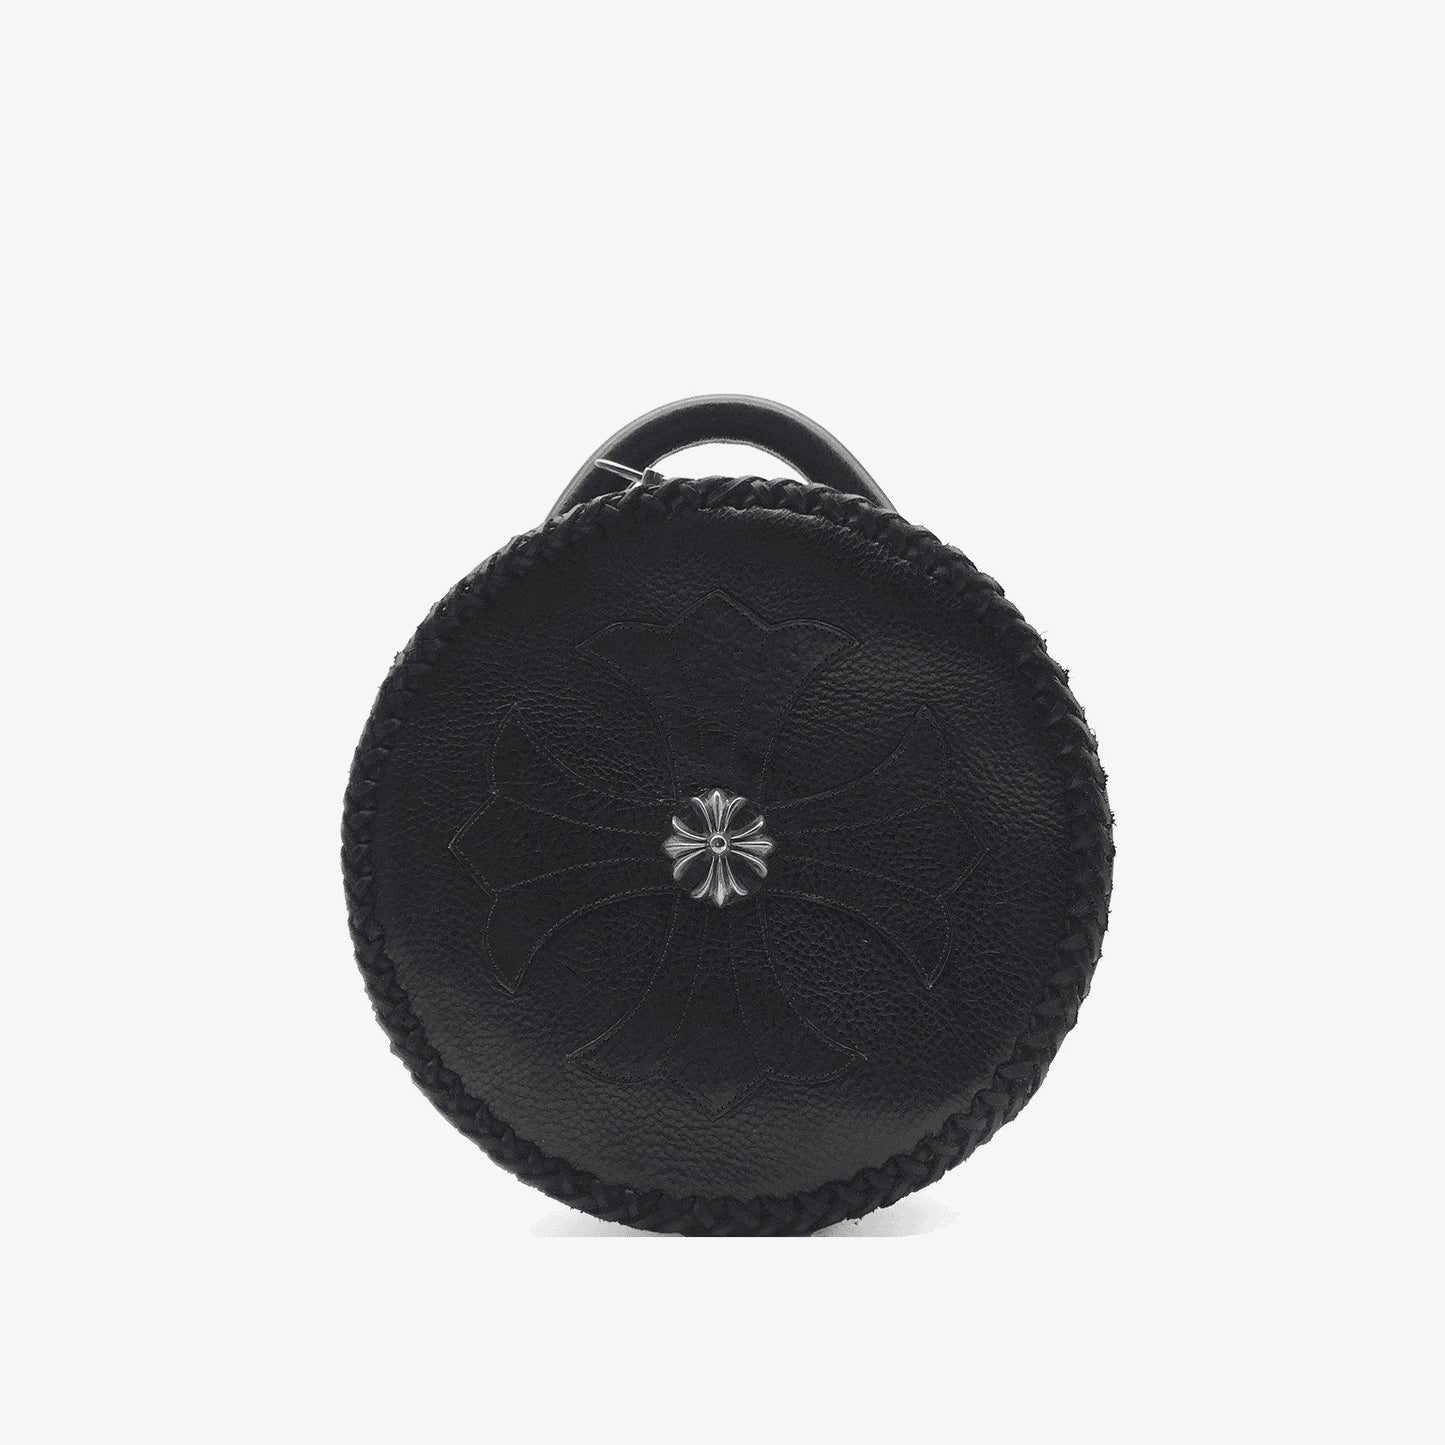 Chrome Hearts Black Moon Baby Bag - SHENGLI ROAD MARKET